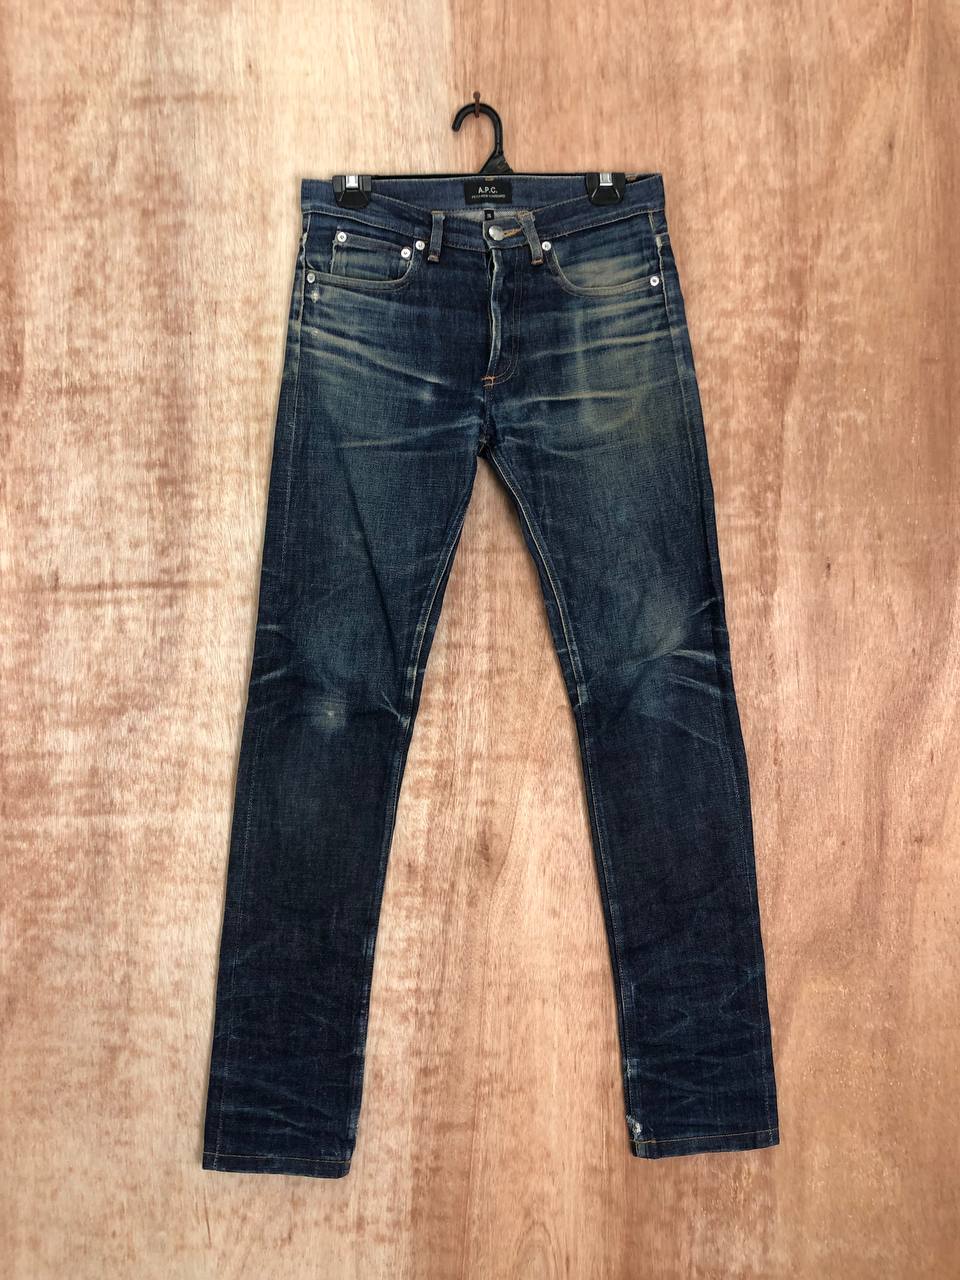 APC Petit Standard Jeans Distressed Selvedge - 1